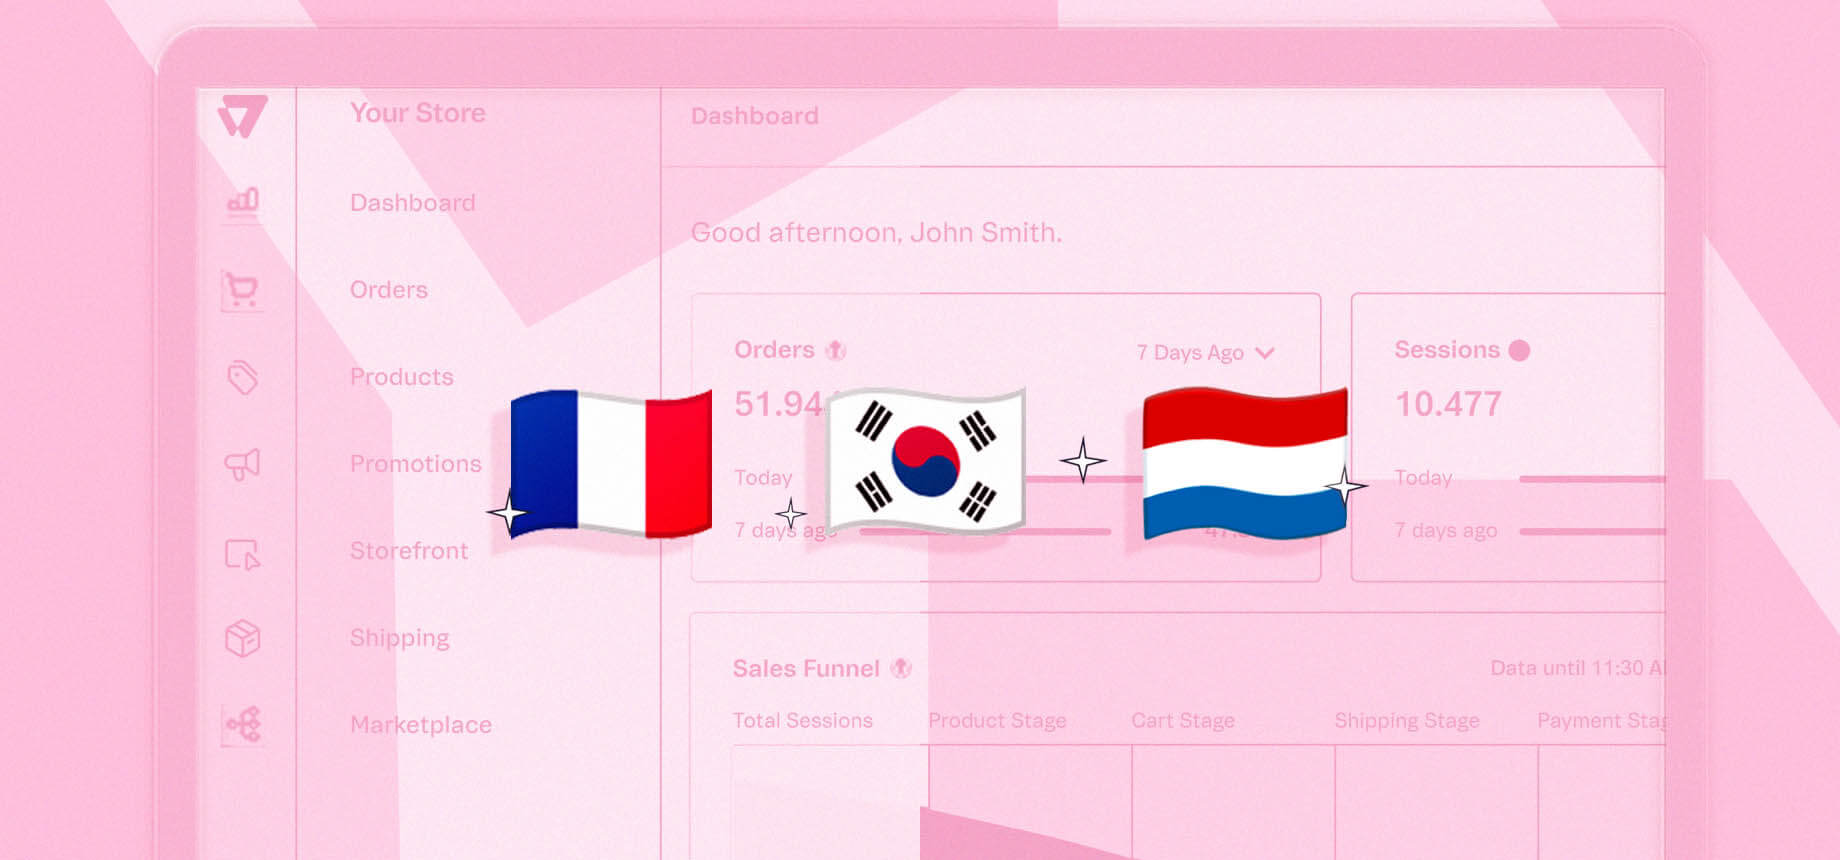 ¡Hoi, salut, 안녕하세요! La plataforma VTEX está ahora disponible en neerlandés, francés y coreano